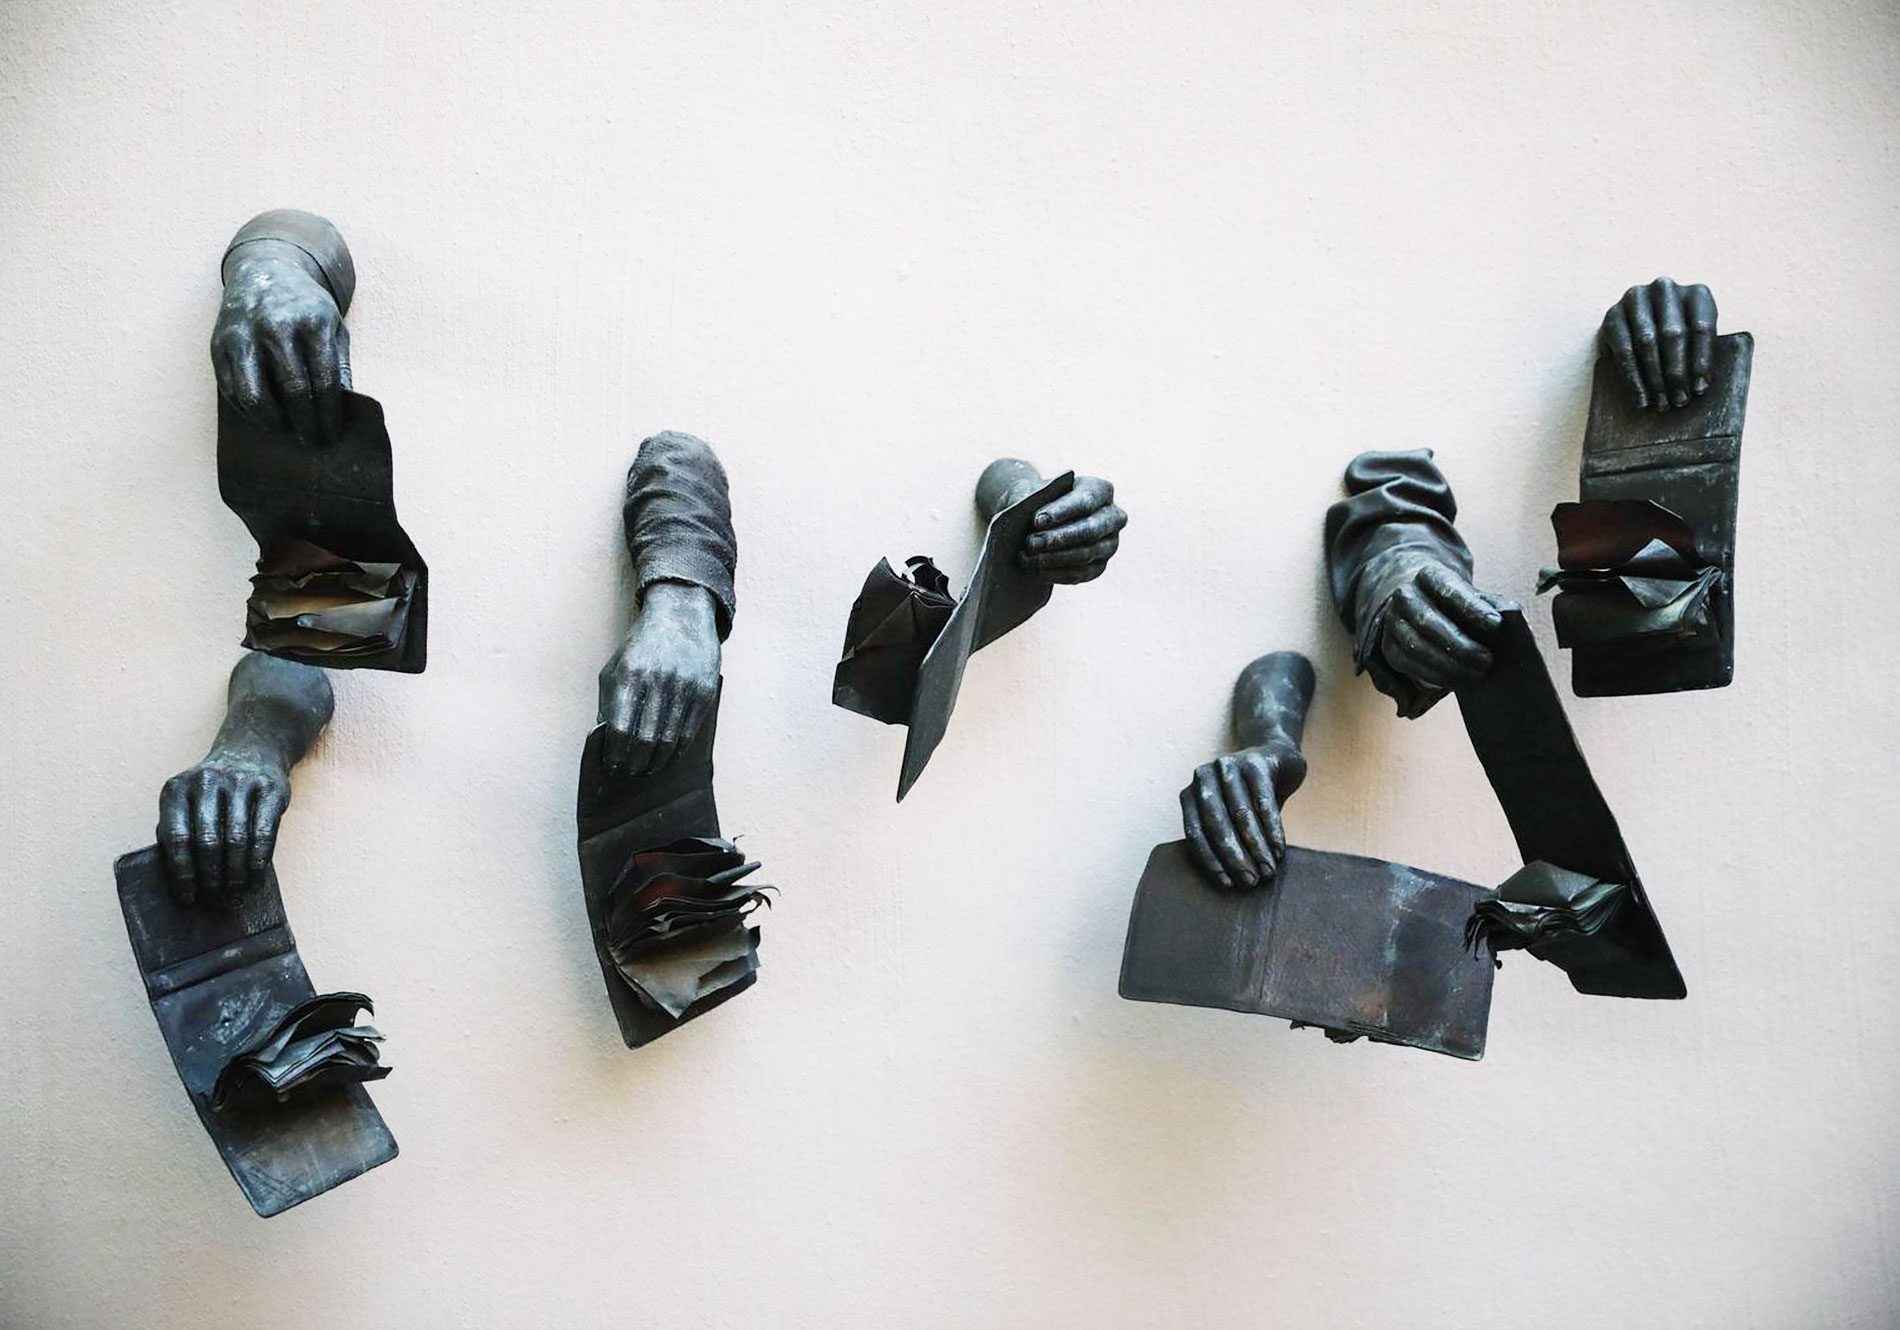 Sculpture of Hands by Hank Willis Thomas